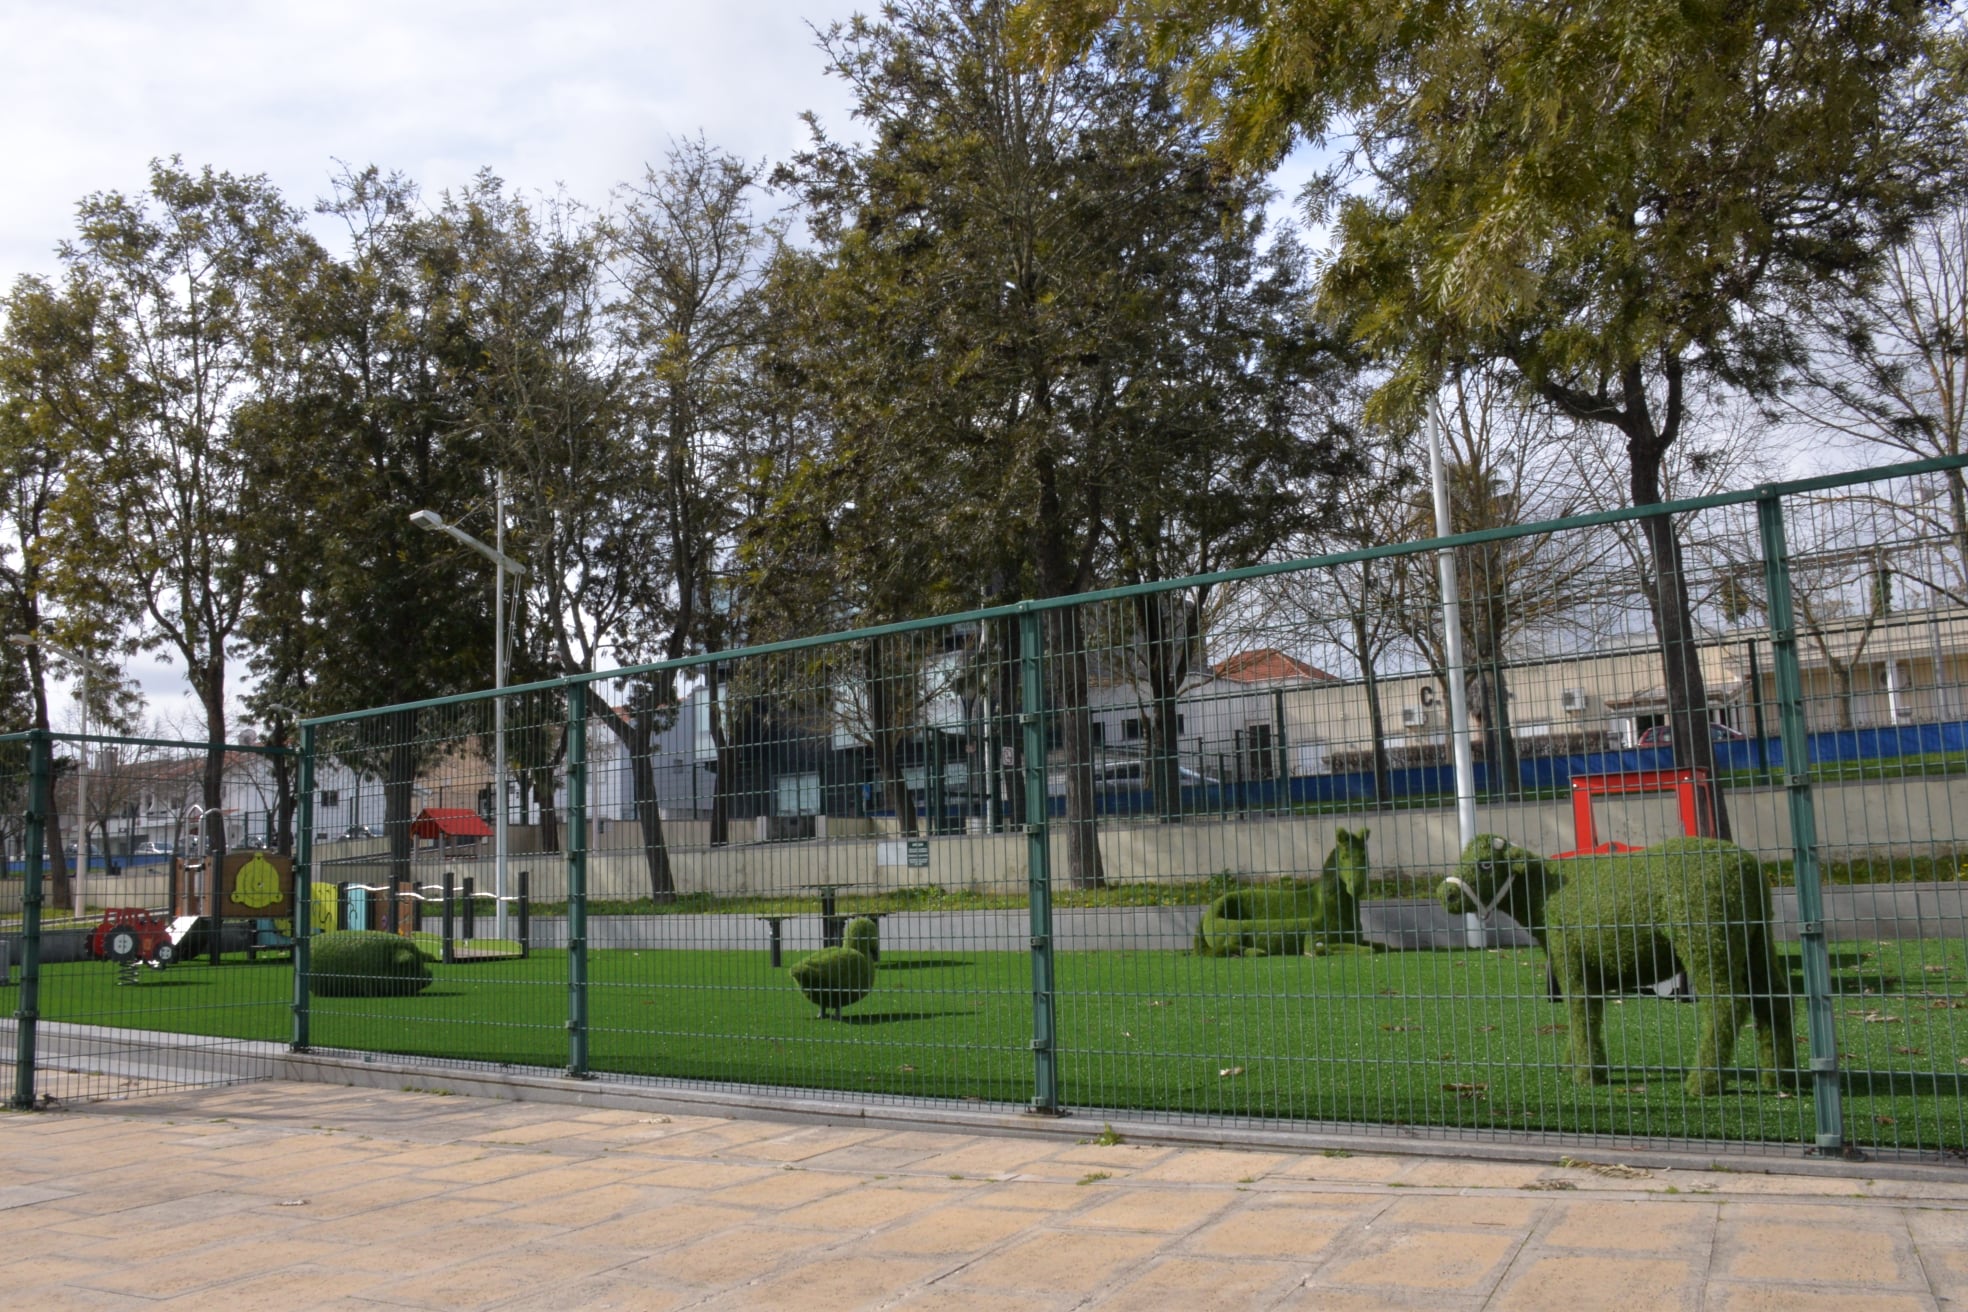 Parque Infantil renovado